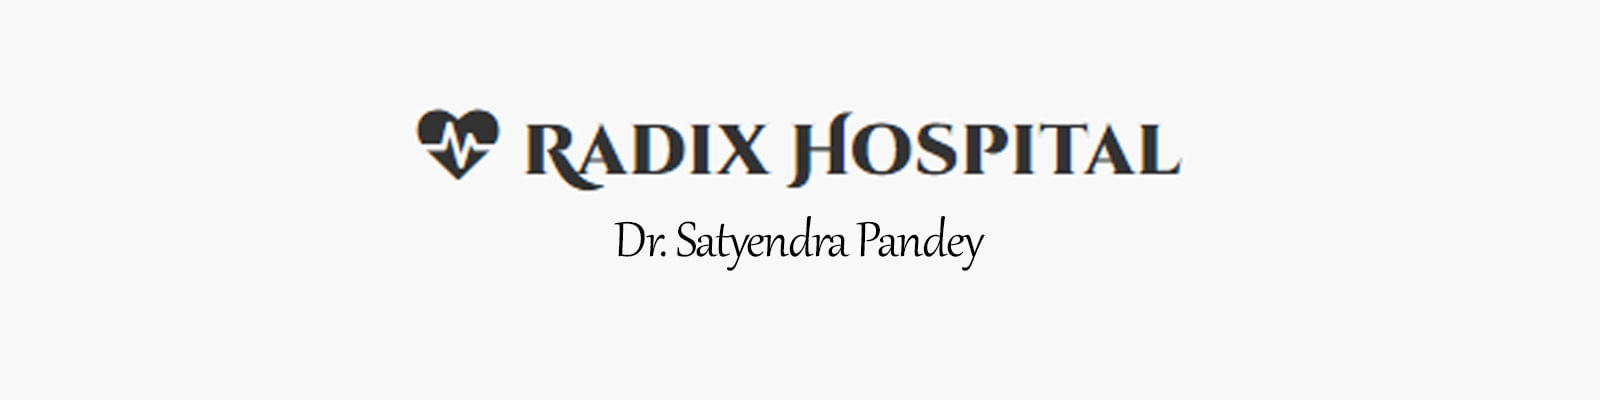 Radix Hospital Varanasi